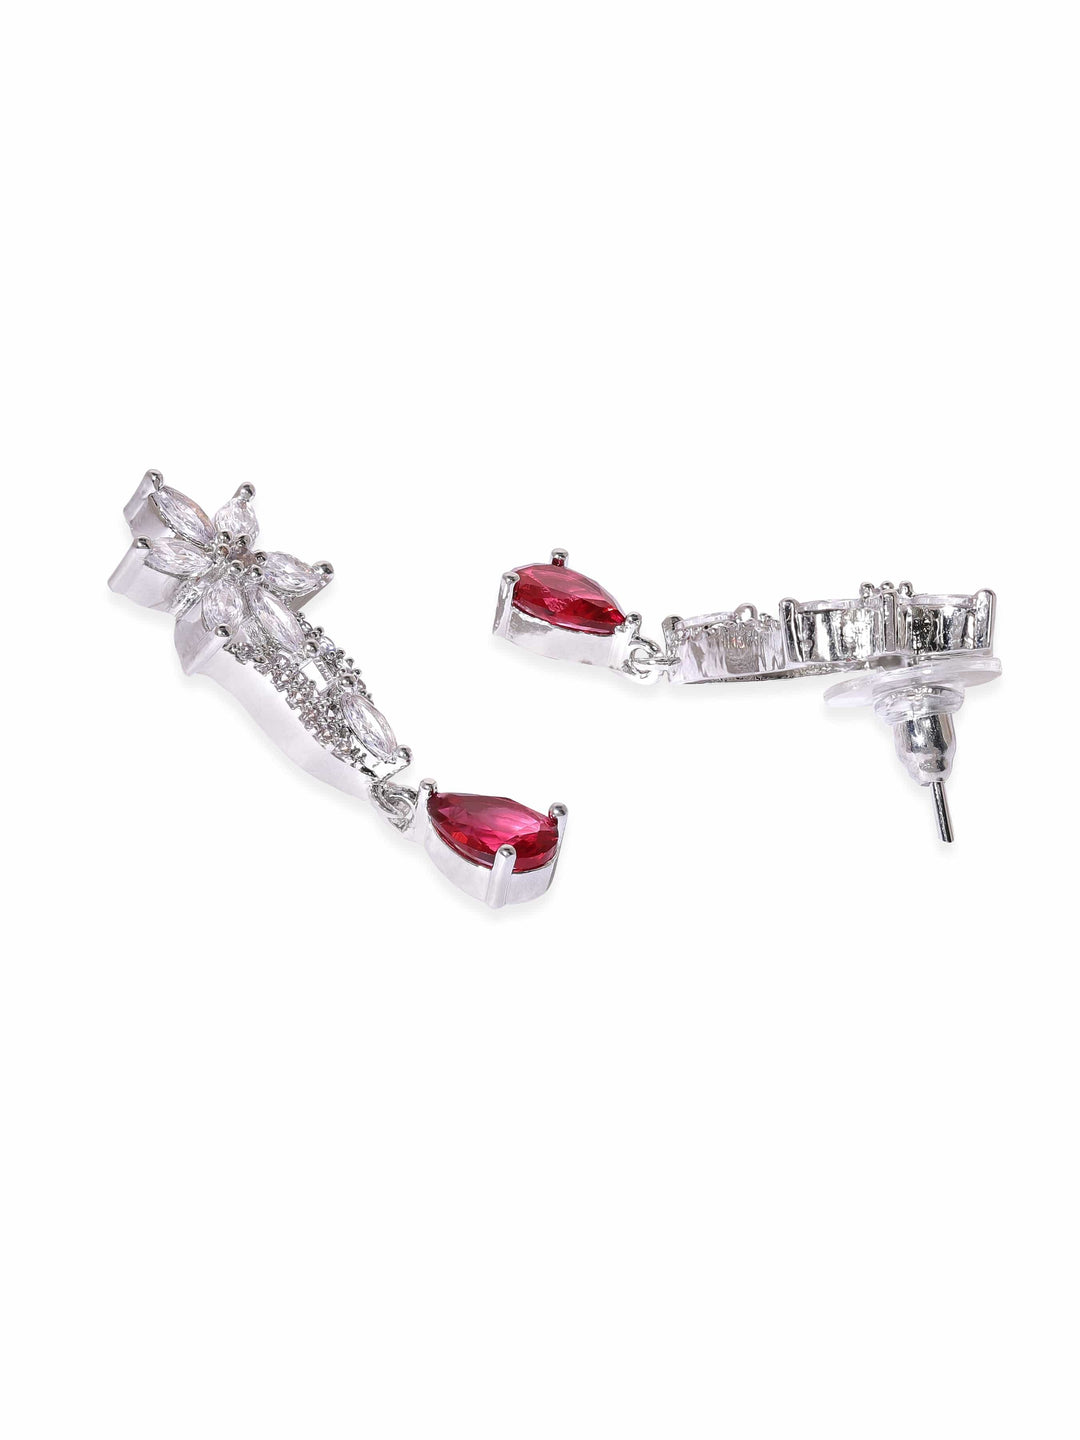 Rubans Rhodium Plated Pave Zirconia Ruby Drop Sleek Necklace Set Jewellery Sets